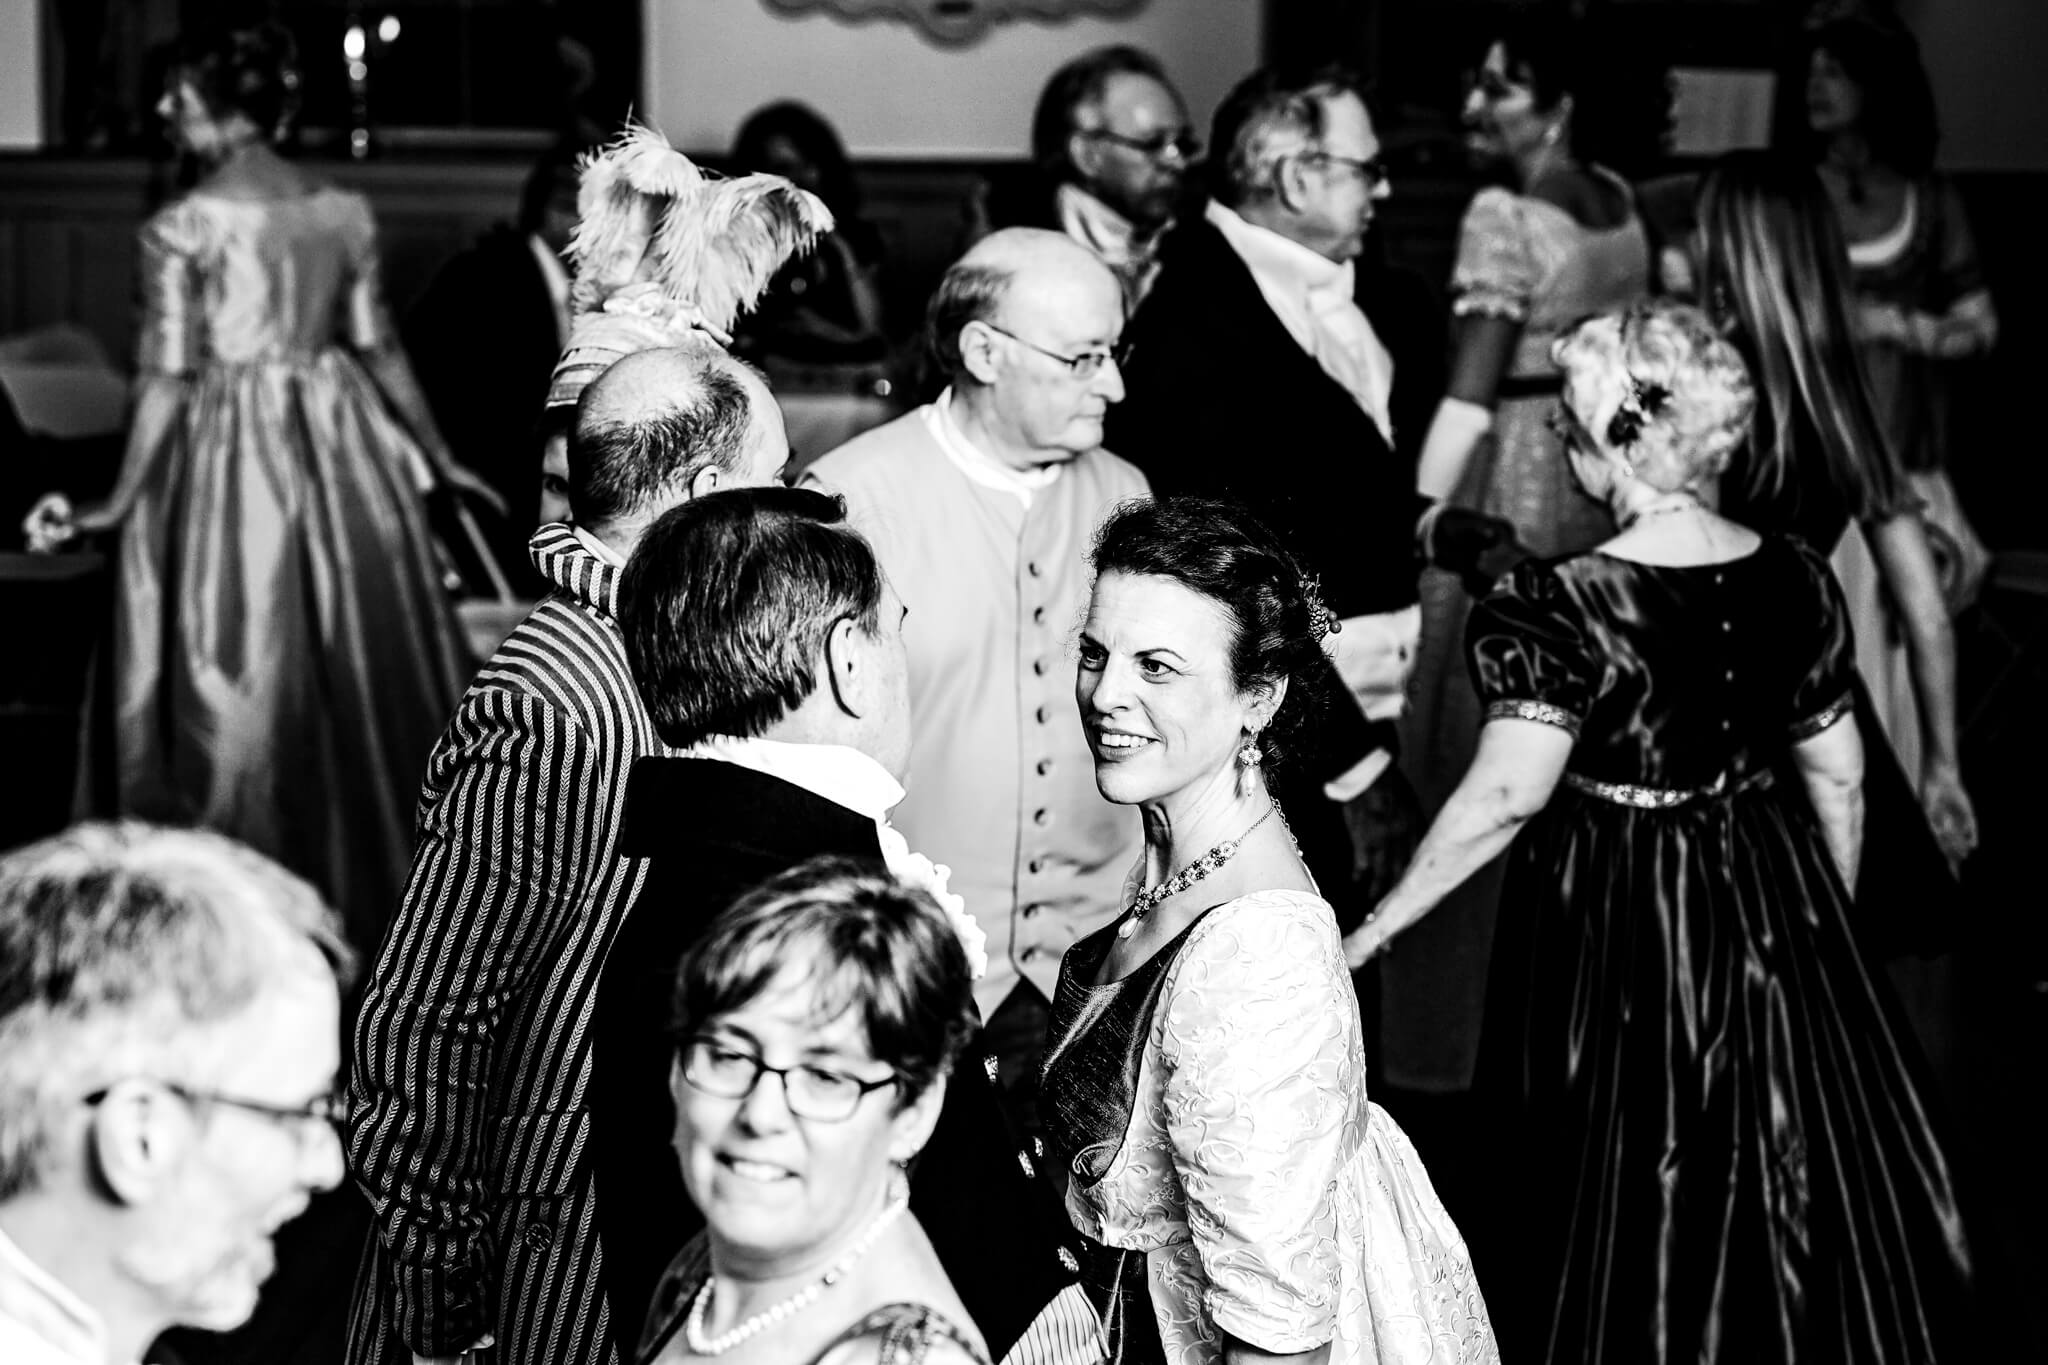 Michelle Charles Gadsby's Tavern Old Town Alexandria Wedding 18th Century Ball Wedding-21.jpg